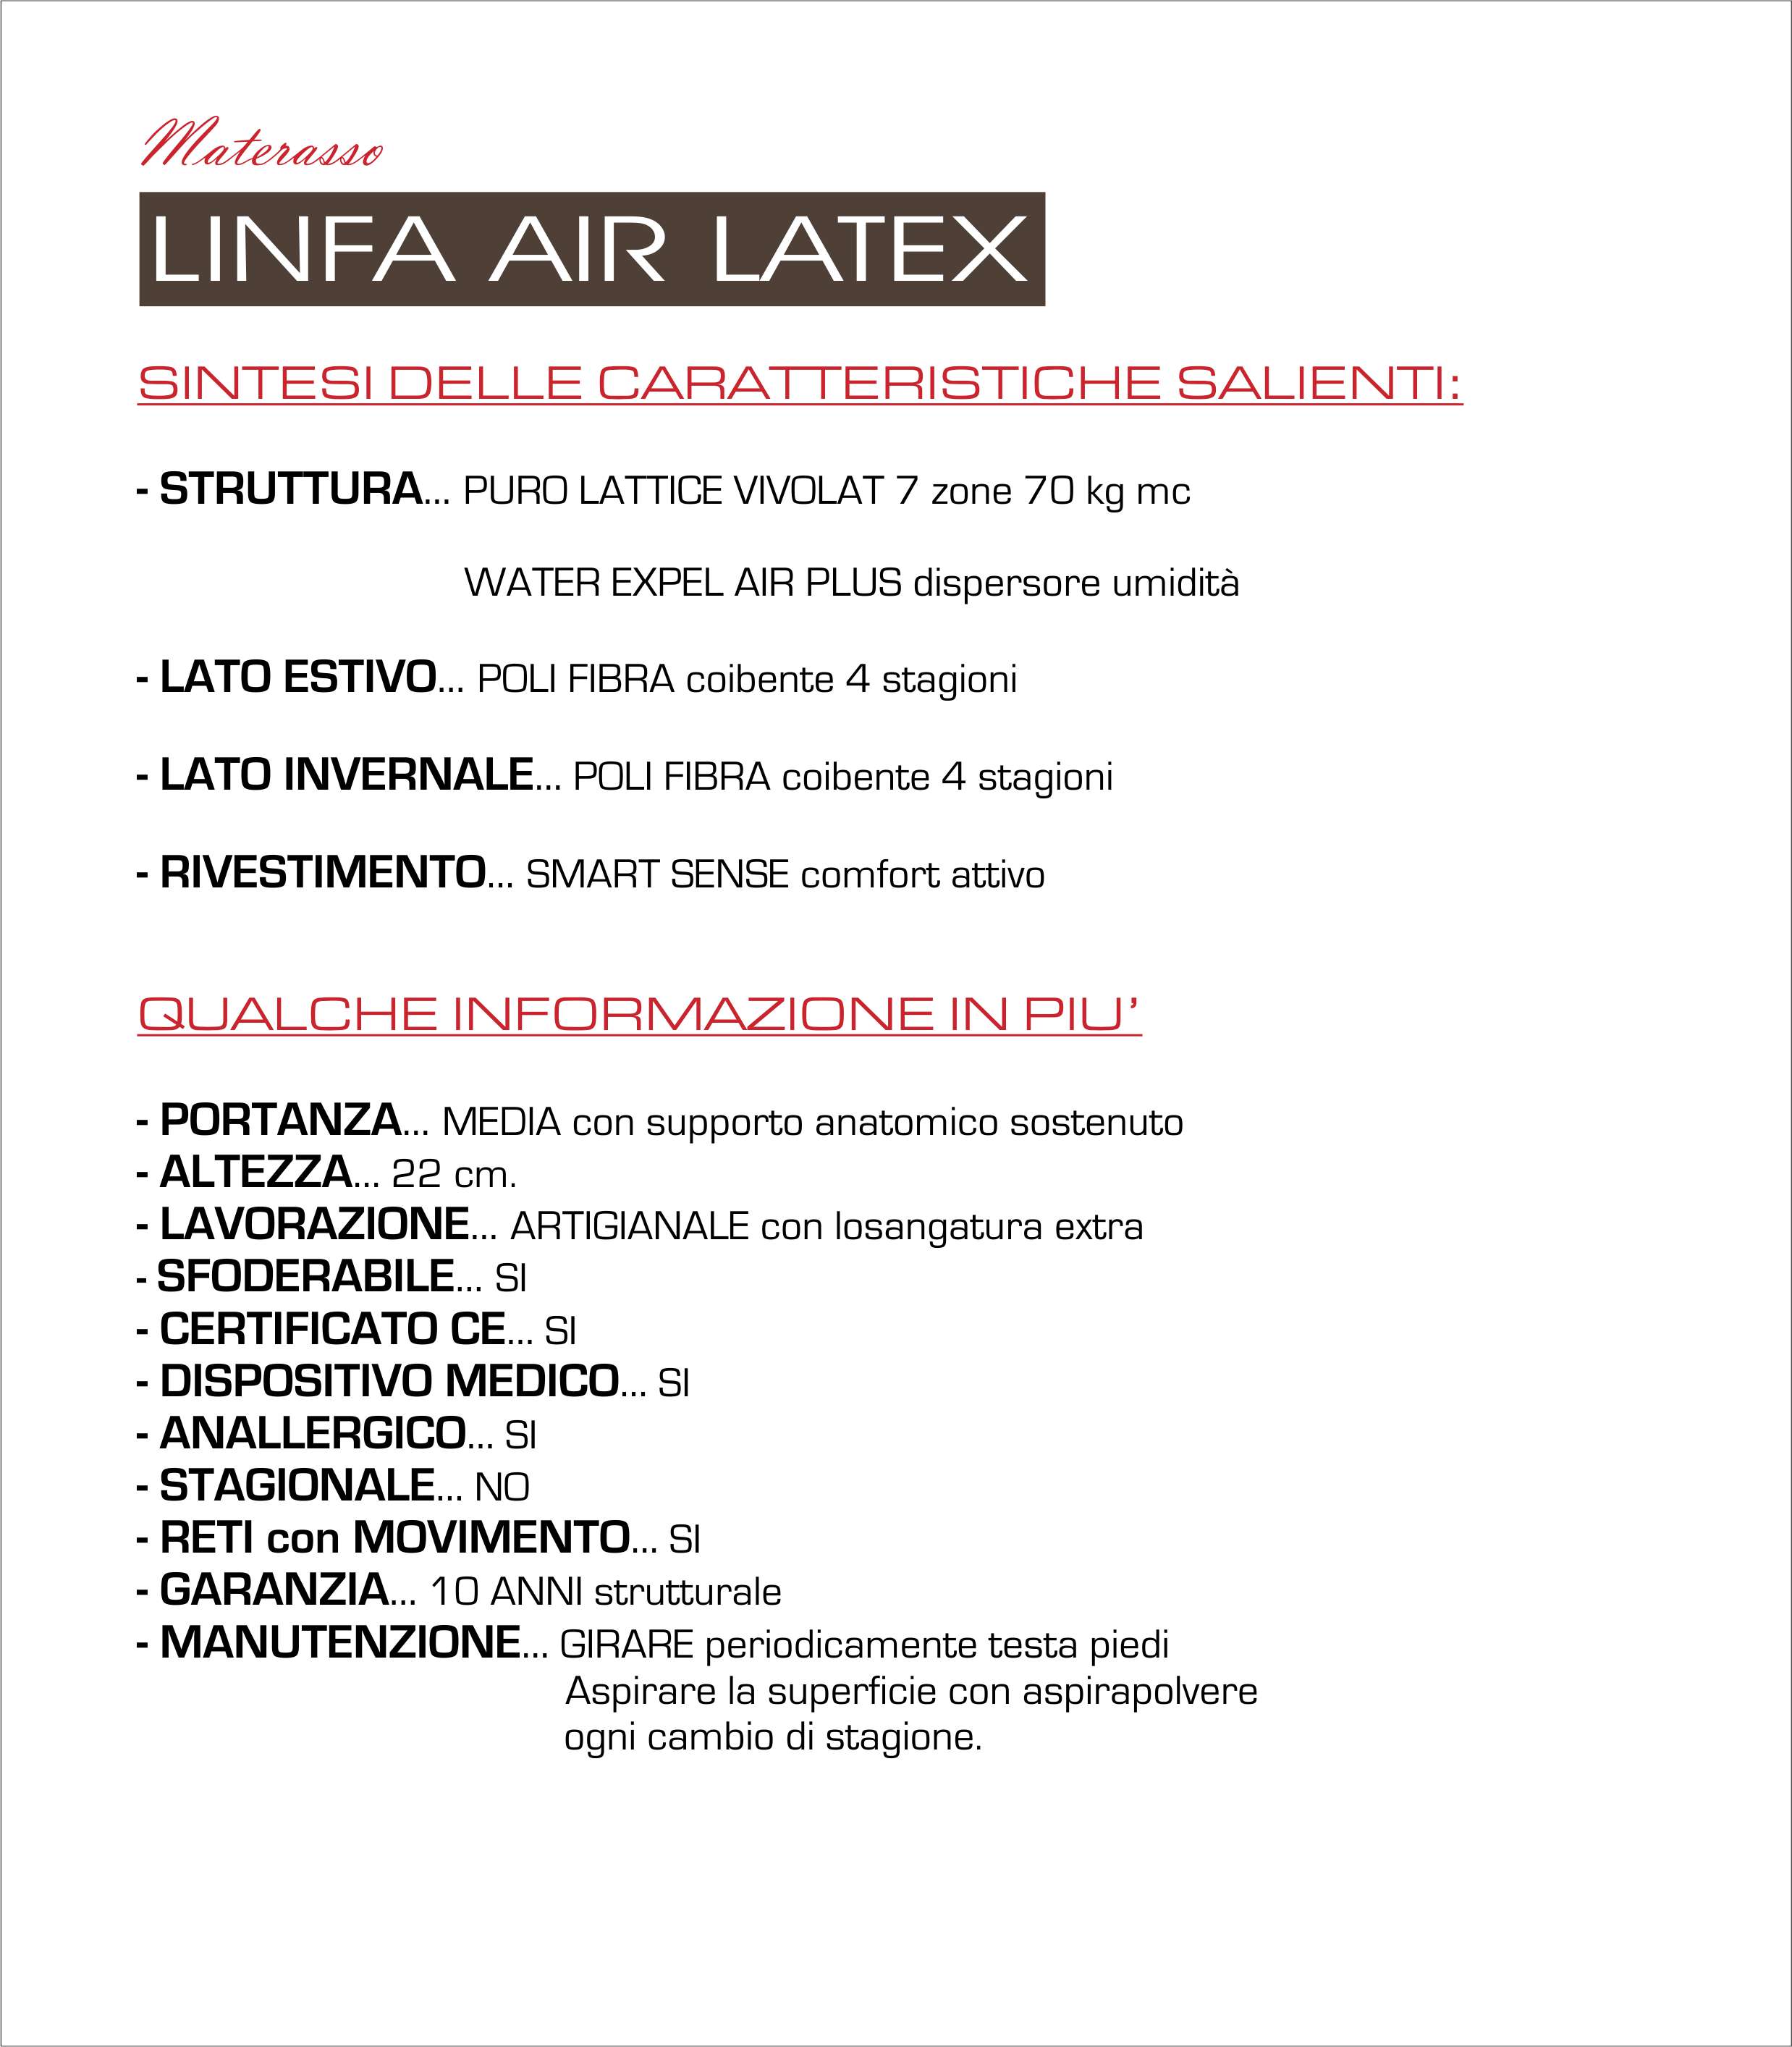 Linfa Air Latex